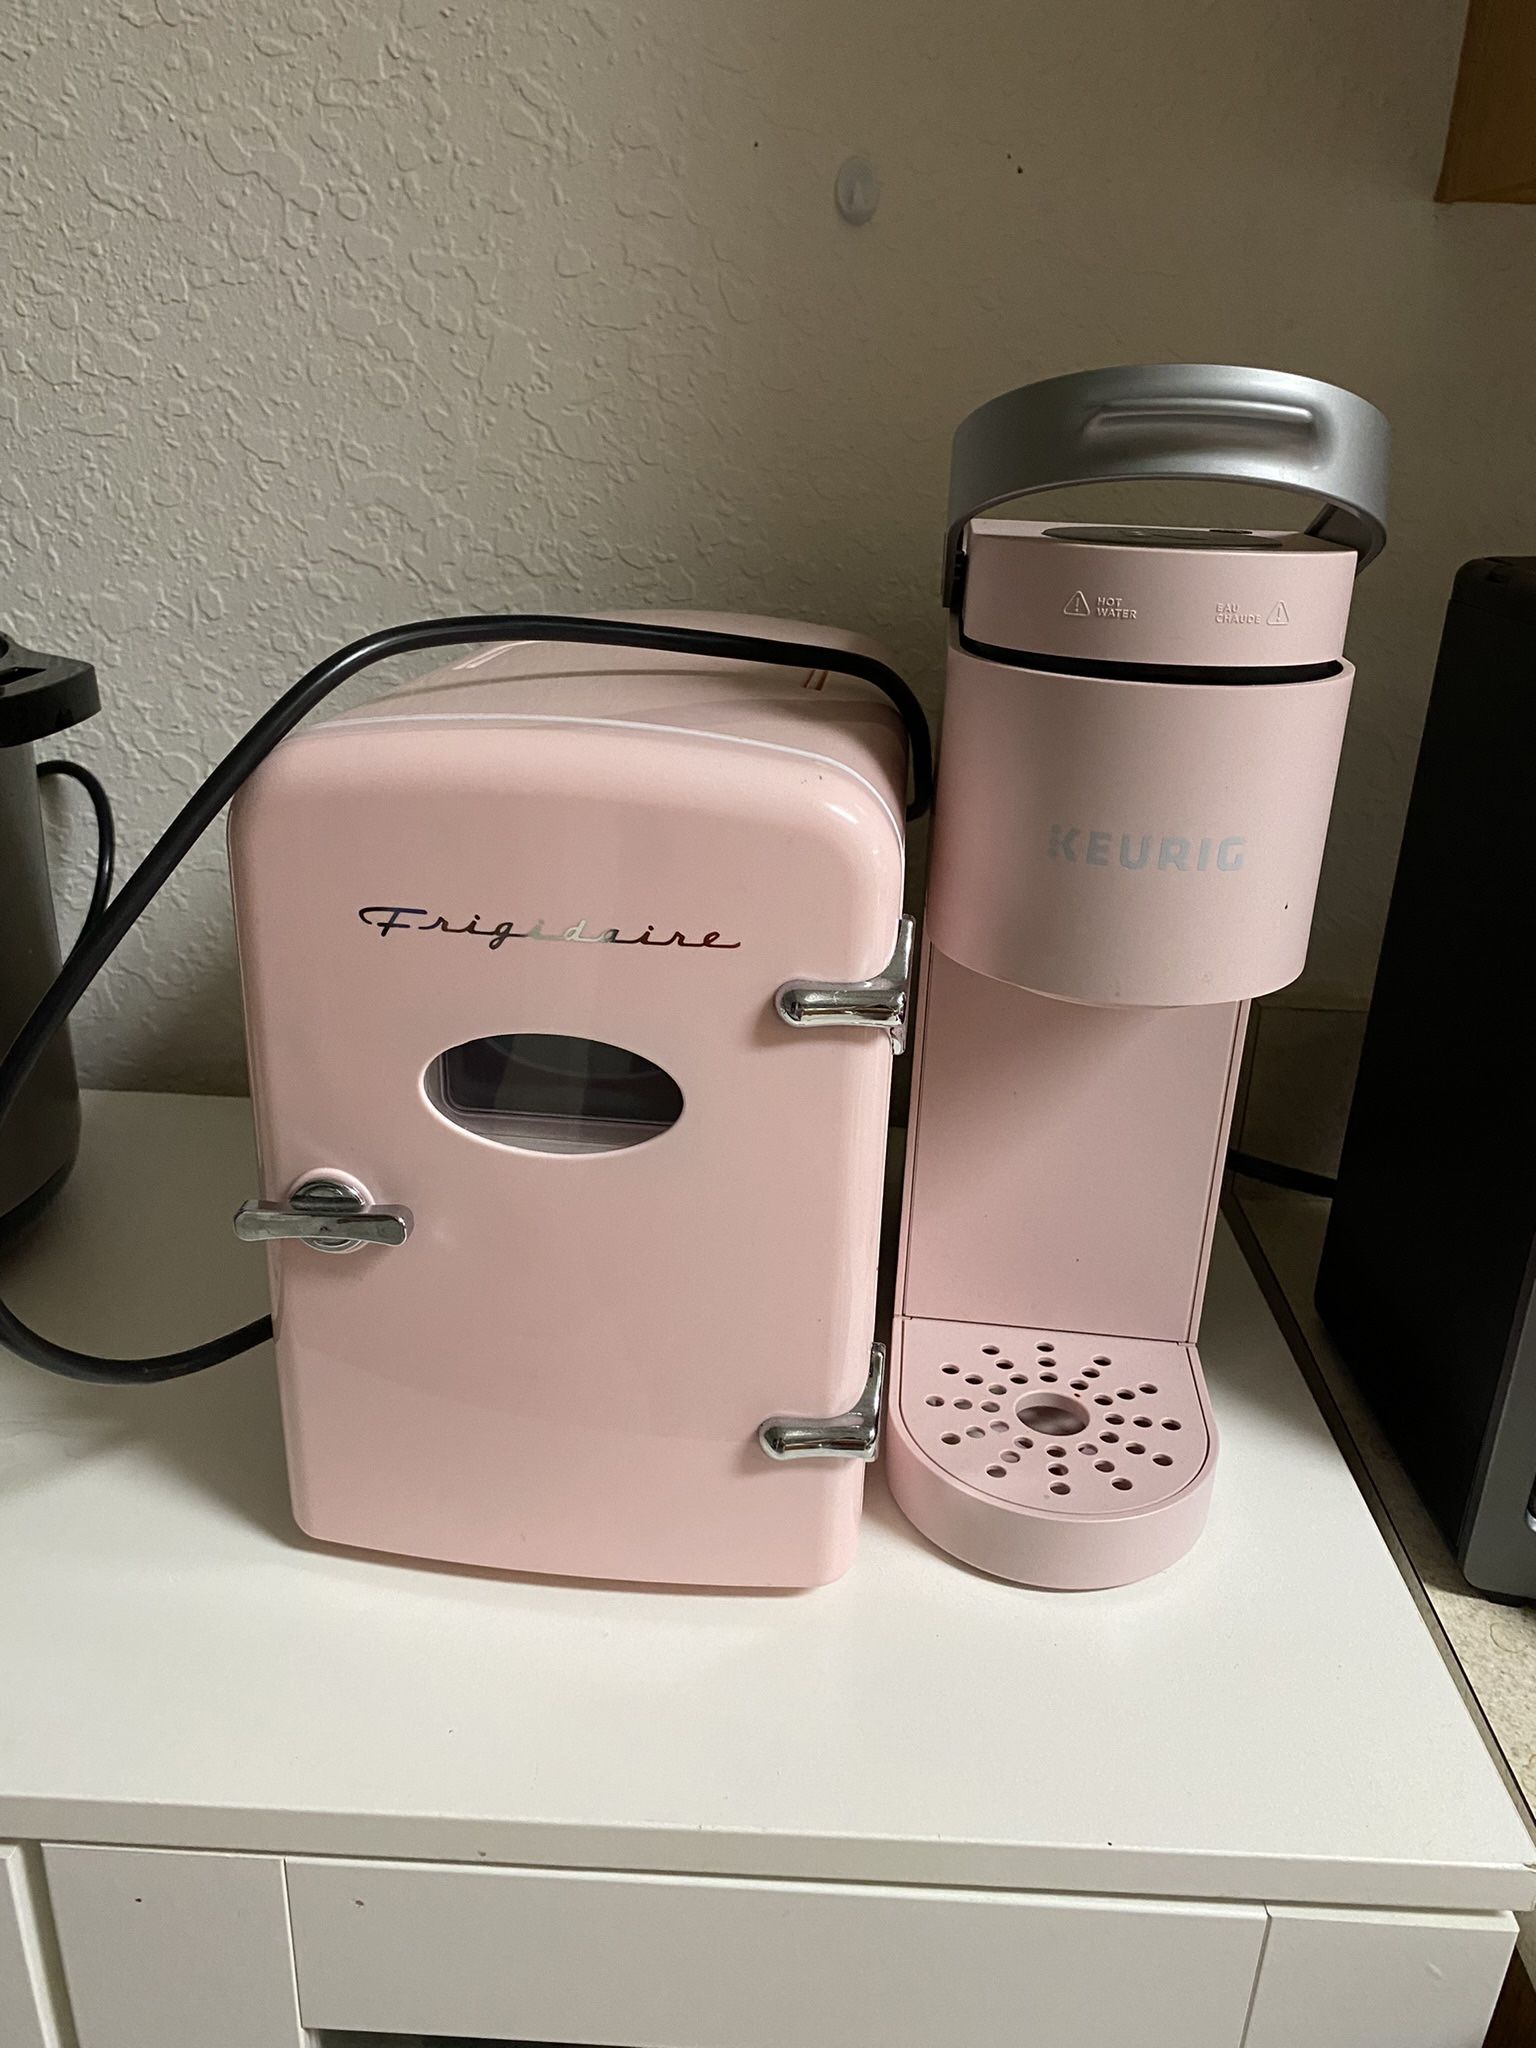 Pink Mini fridge And kEURIG Pod Machine